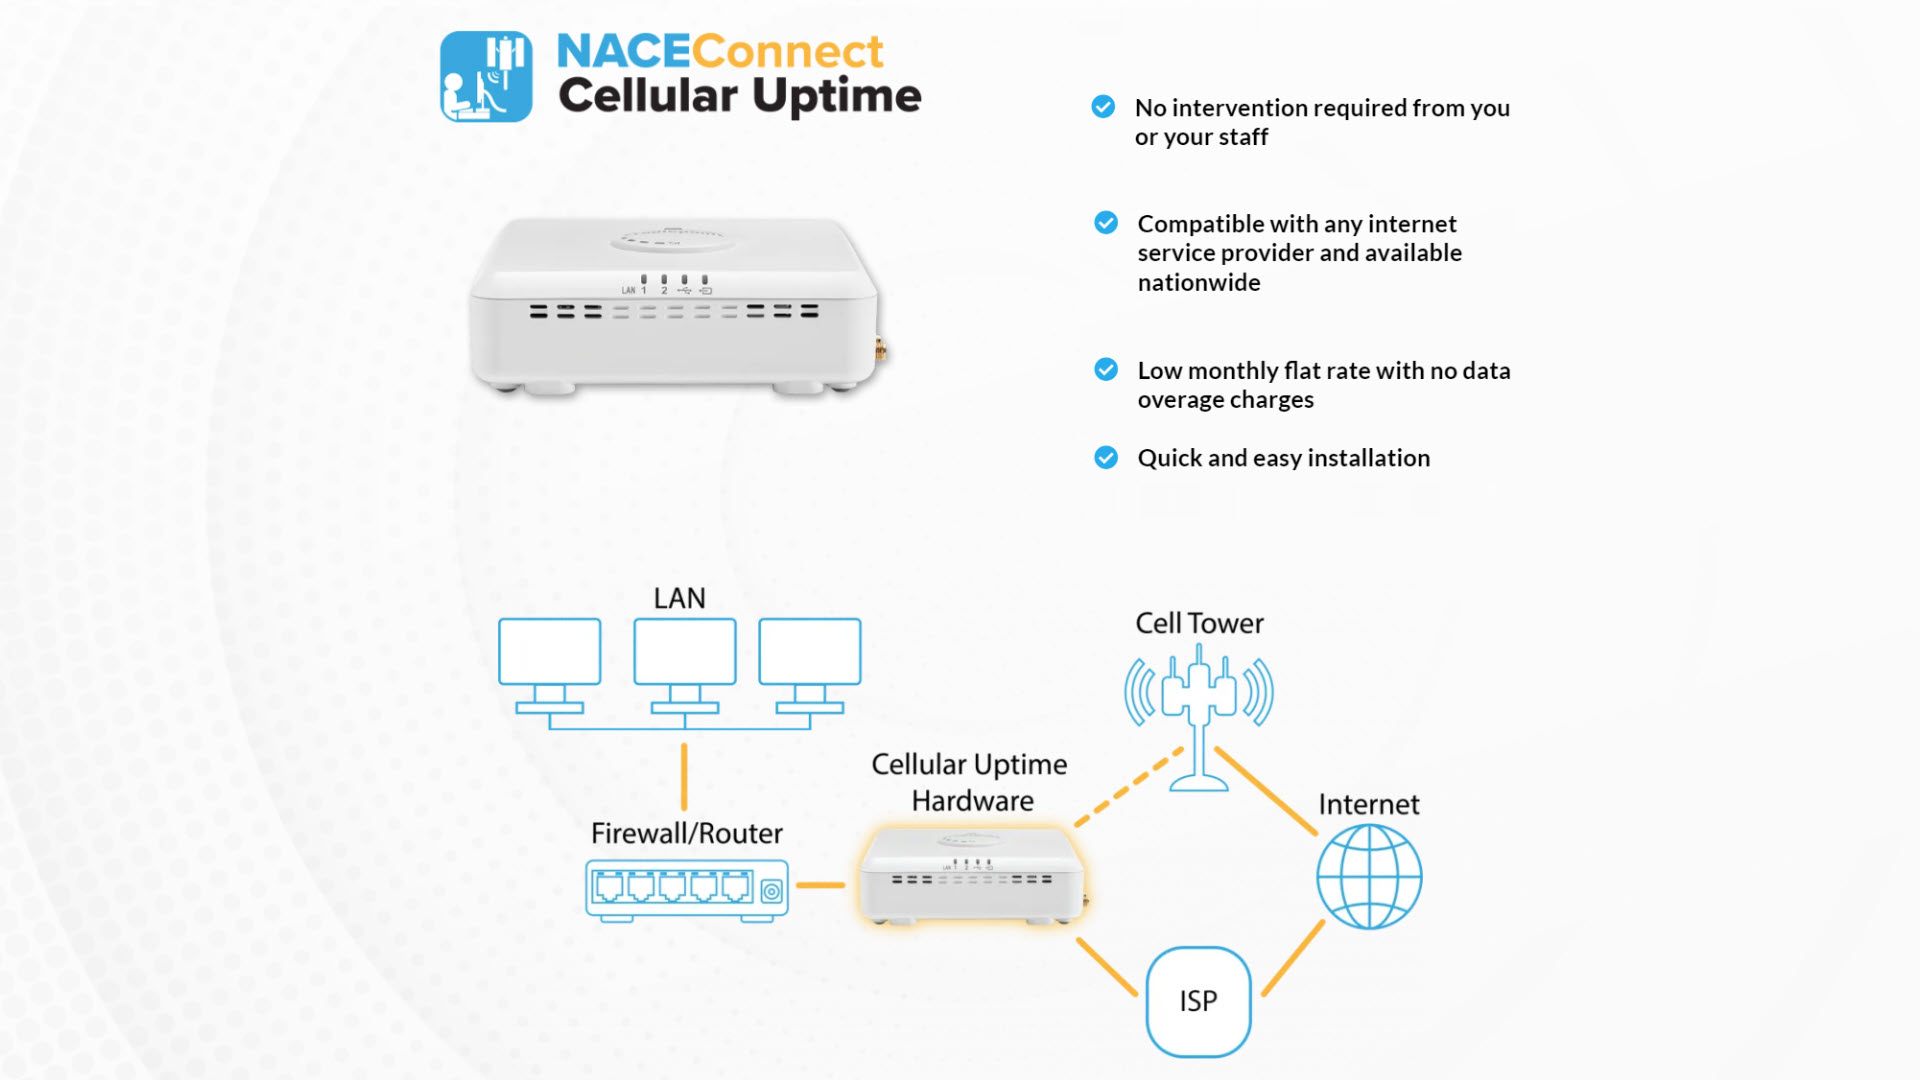  NACE Connect Cellular Uptime